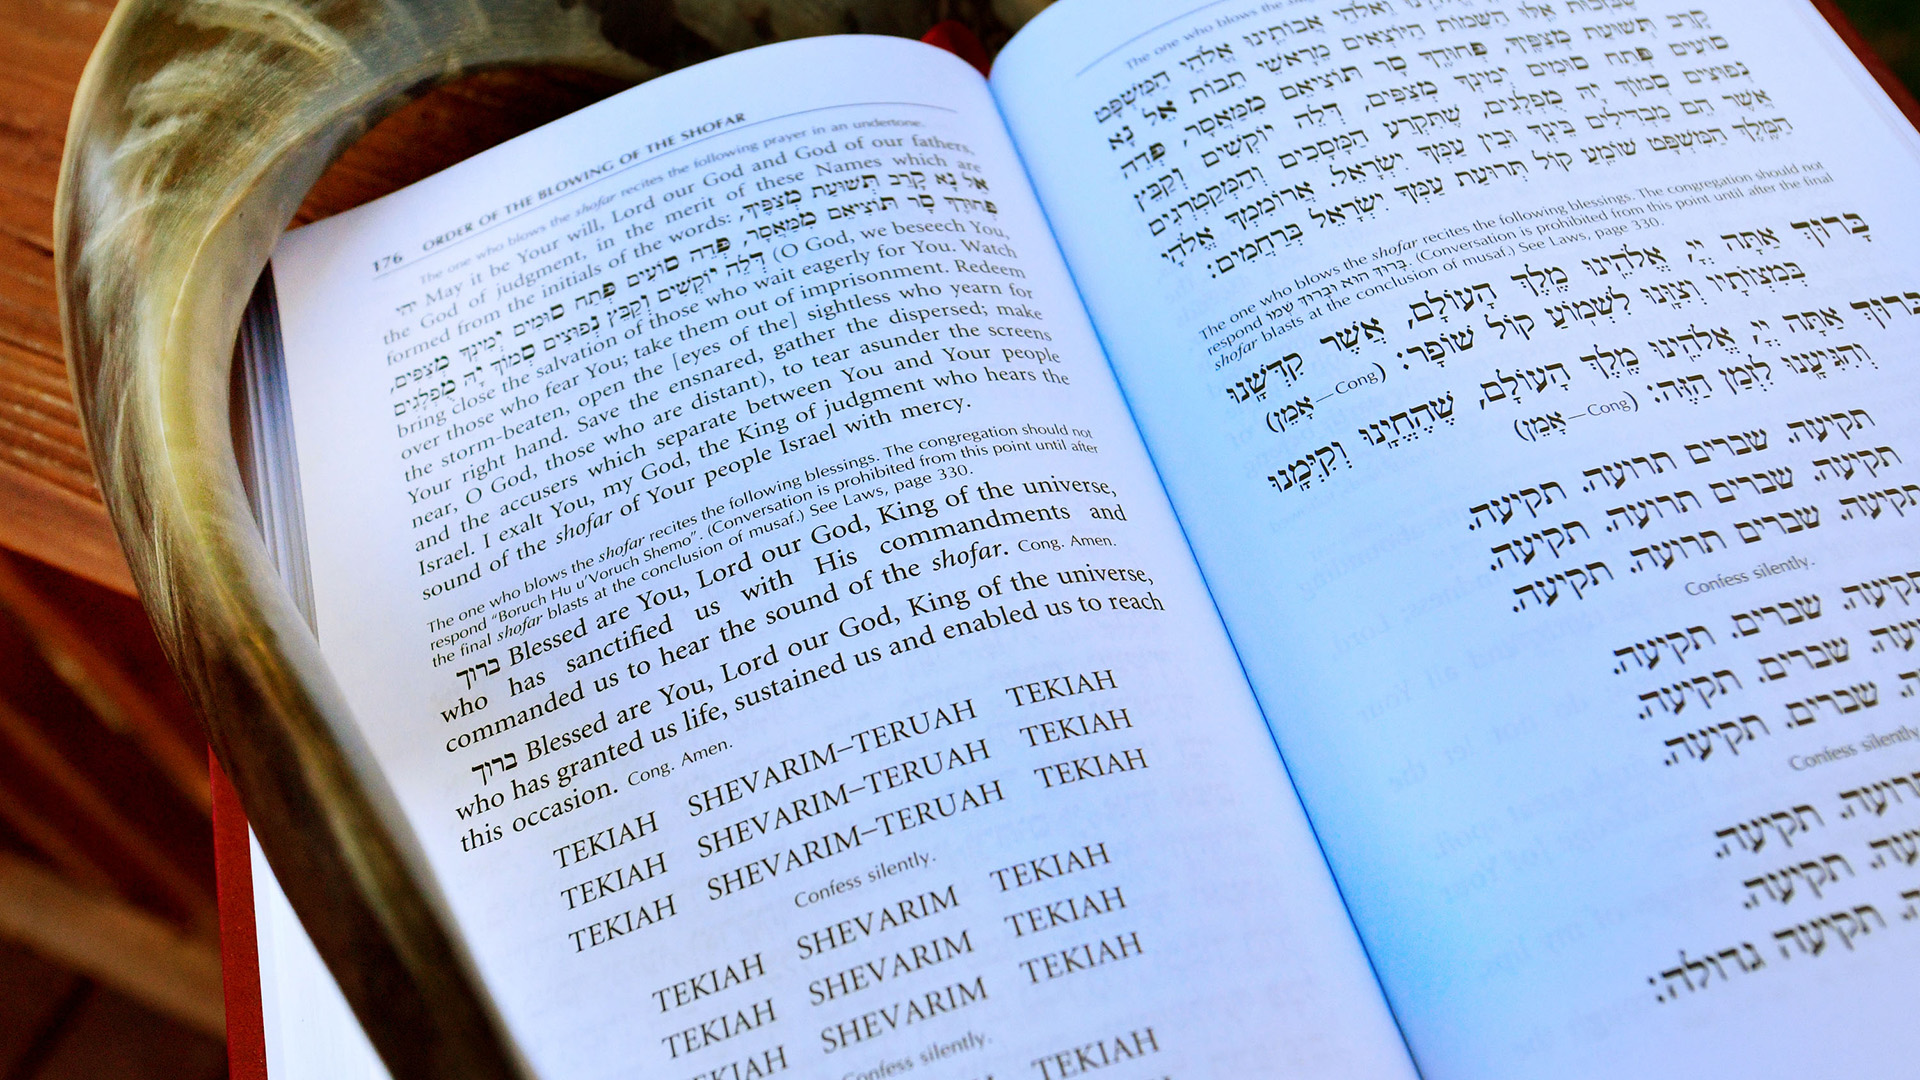 The book on Rosh Hashanah